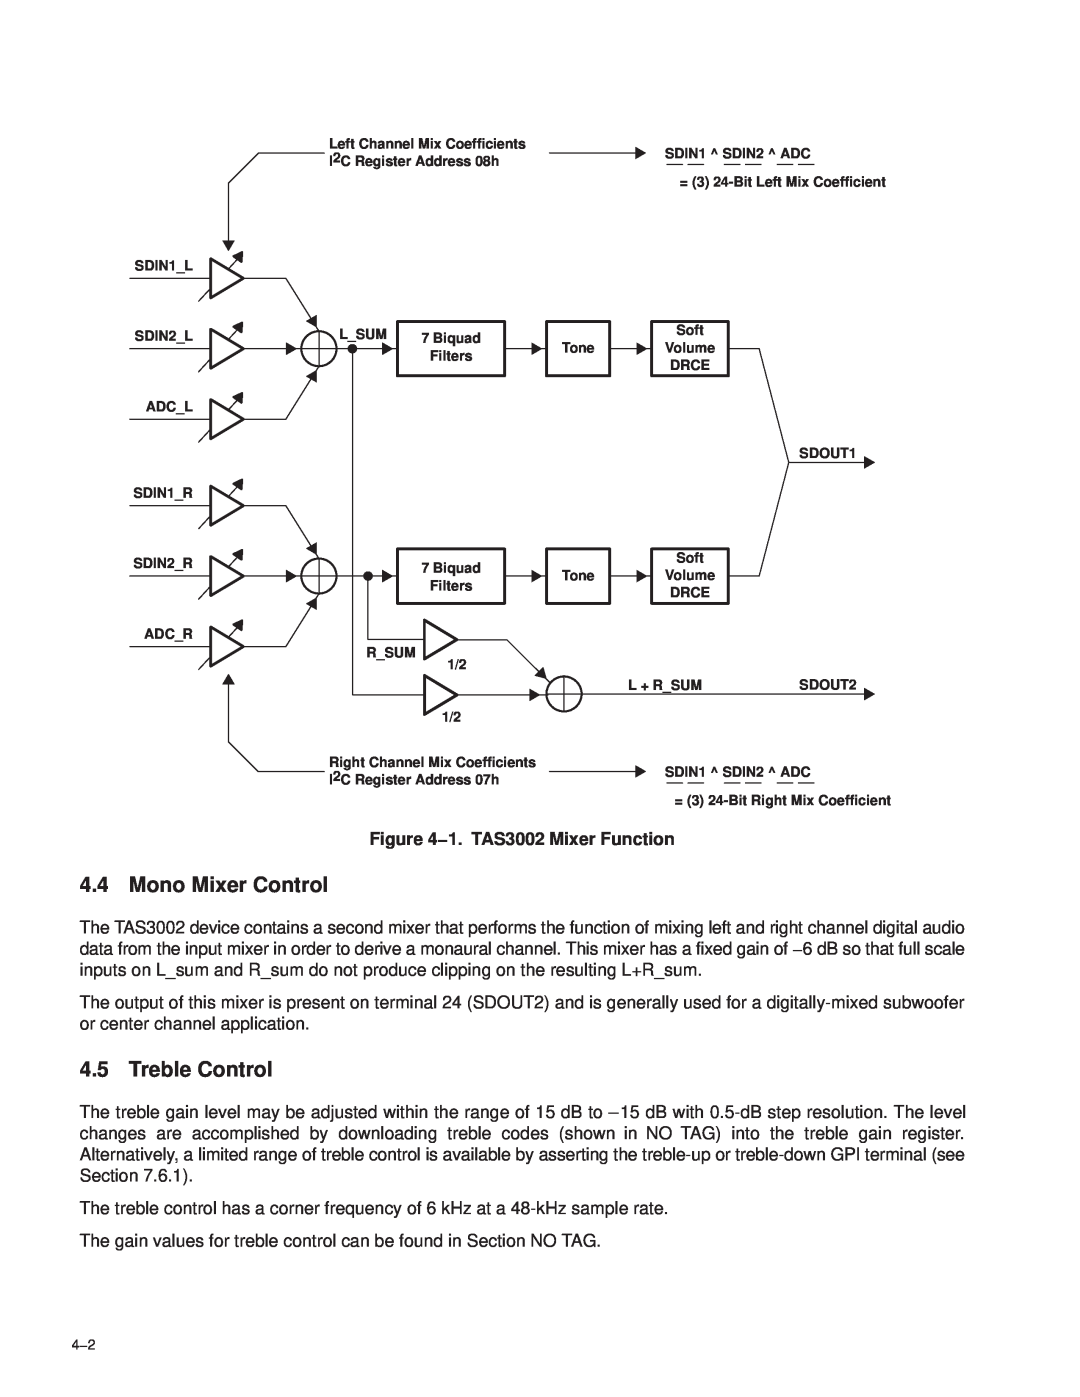 Texas Instruments manual Mono Mixer Control, Treble Control, 1. TAS3002 Mixer Function 